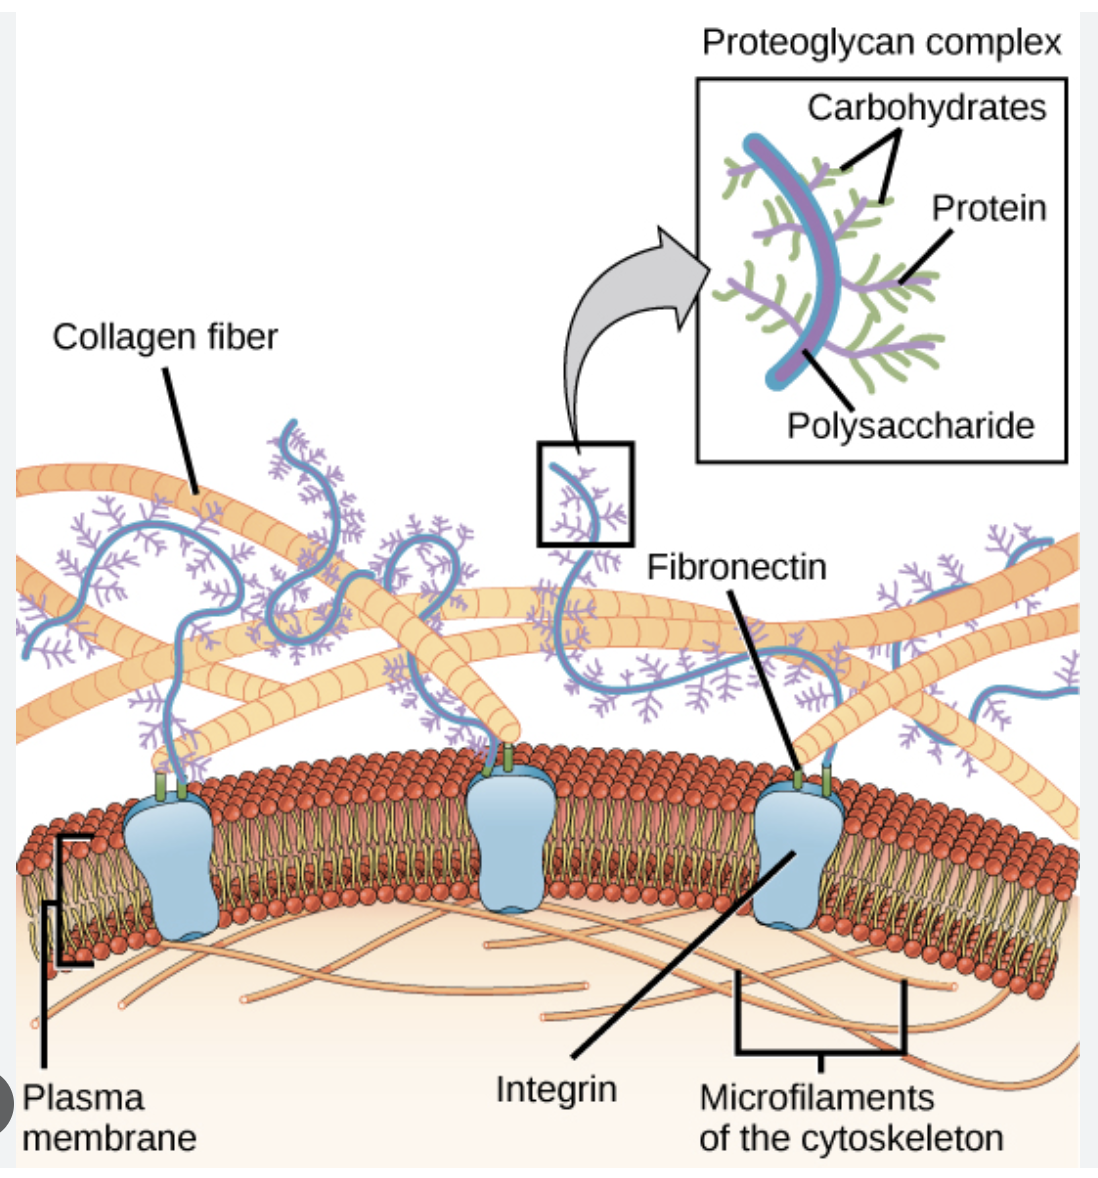 Collagen fiber
Plasma
membrane
Integrin
Proteoglycan complex
Carbohydrates
1
Protein
Polysaccharide
Fibronectin
Microfilaments
of the cytoskeleton